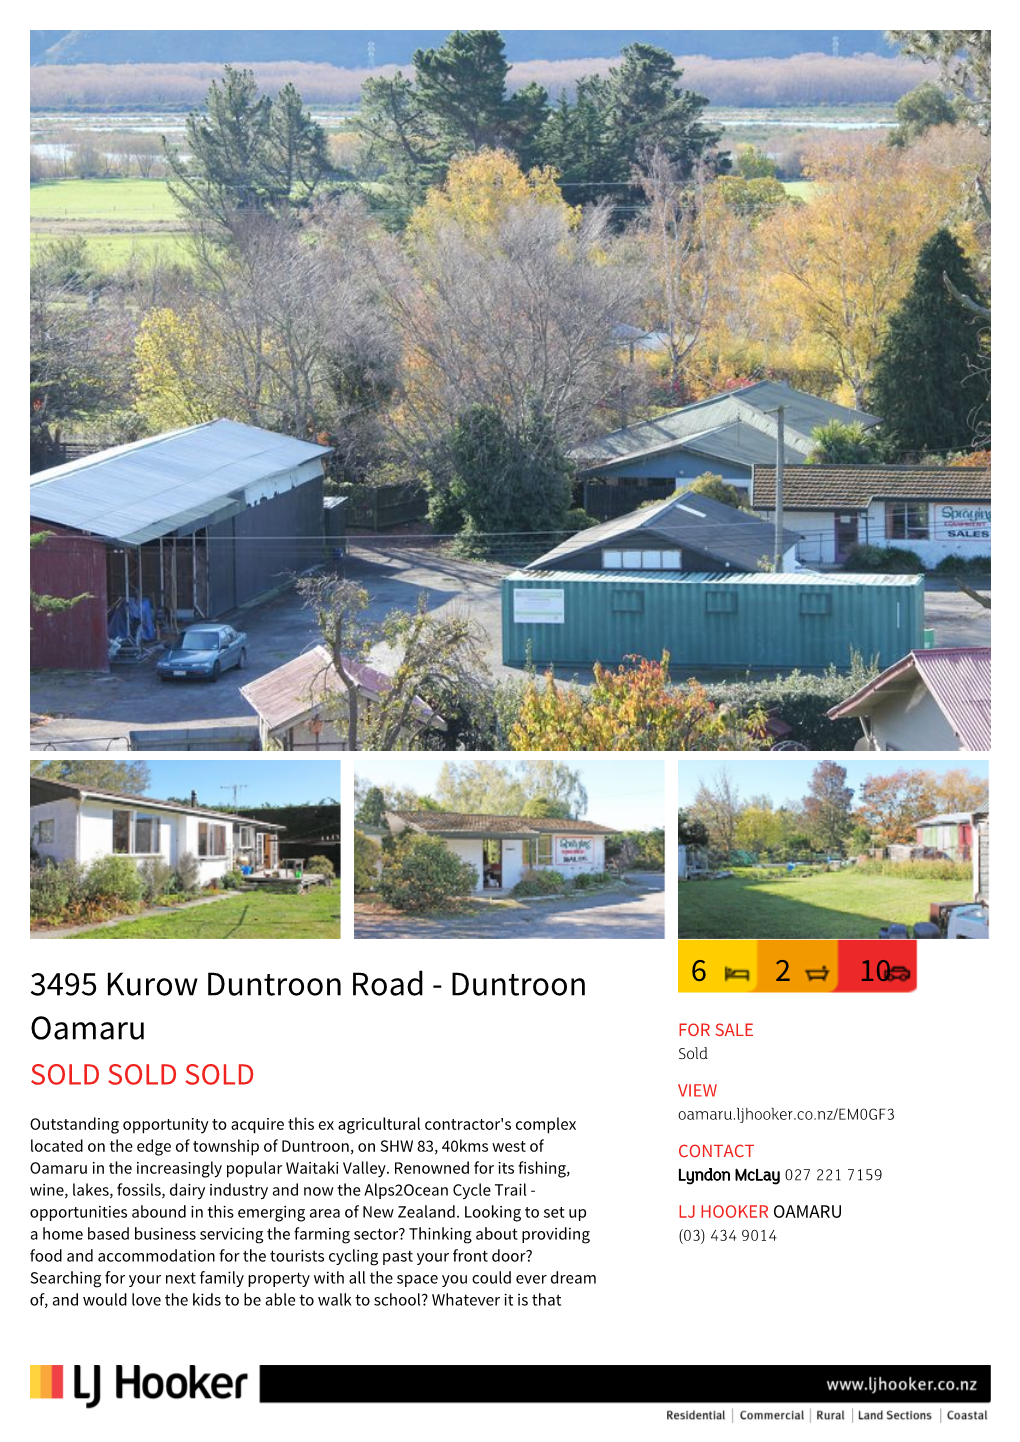 3495 Kurow Duntroon Road - Duntroon 6 2 10 Oamaru for SALE Sold